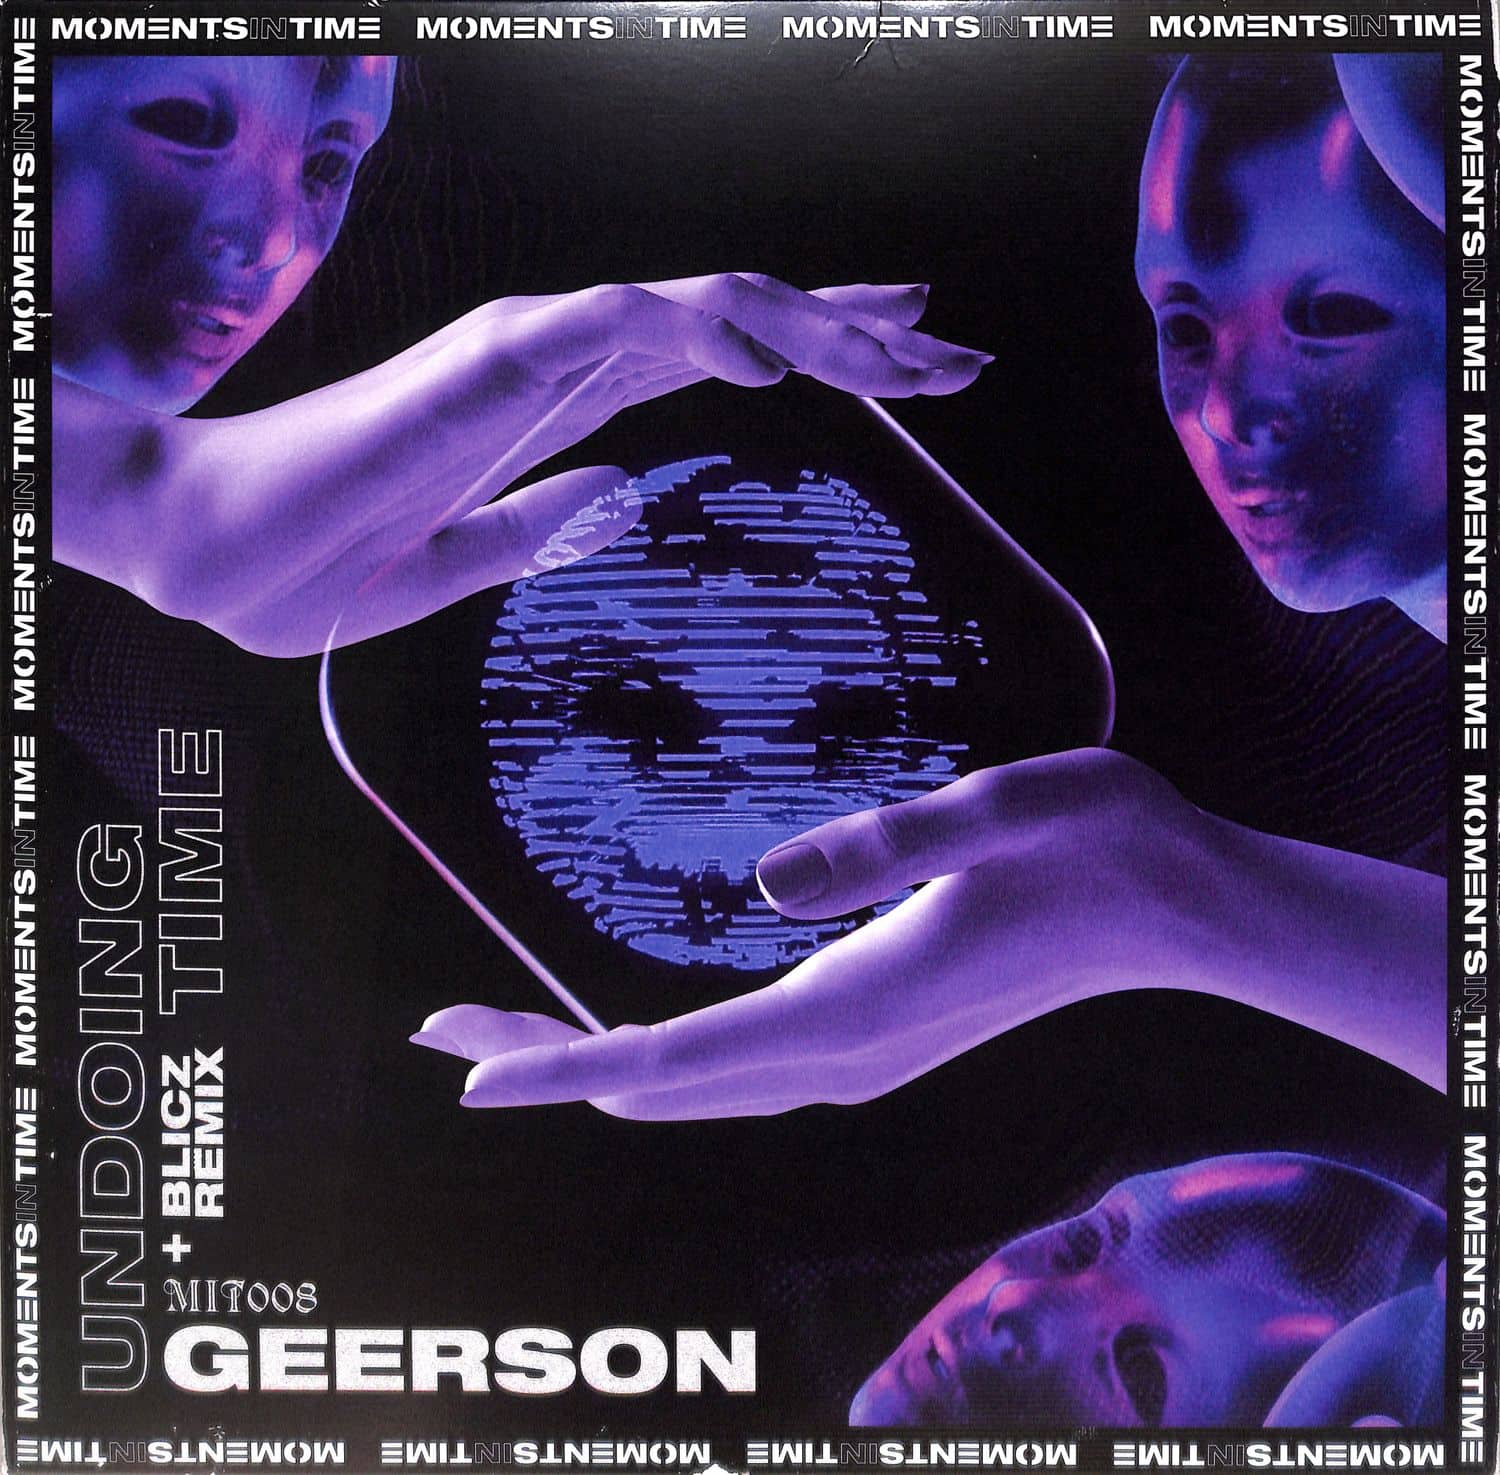 Geerson - UNDOING TIME 